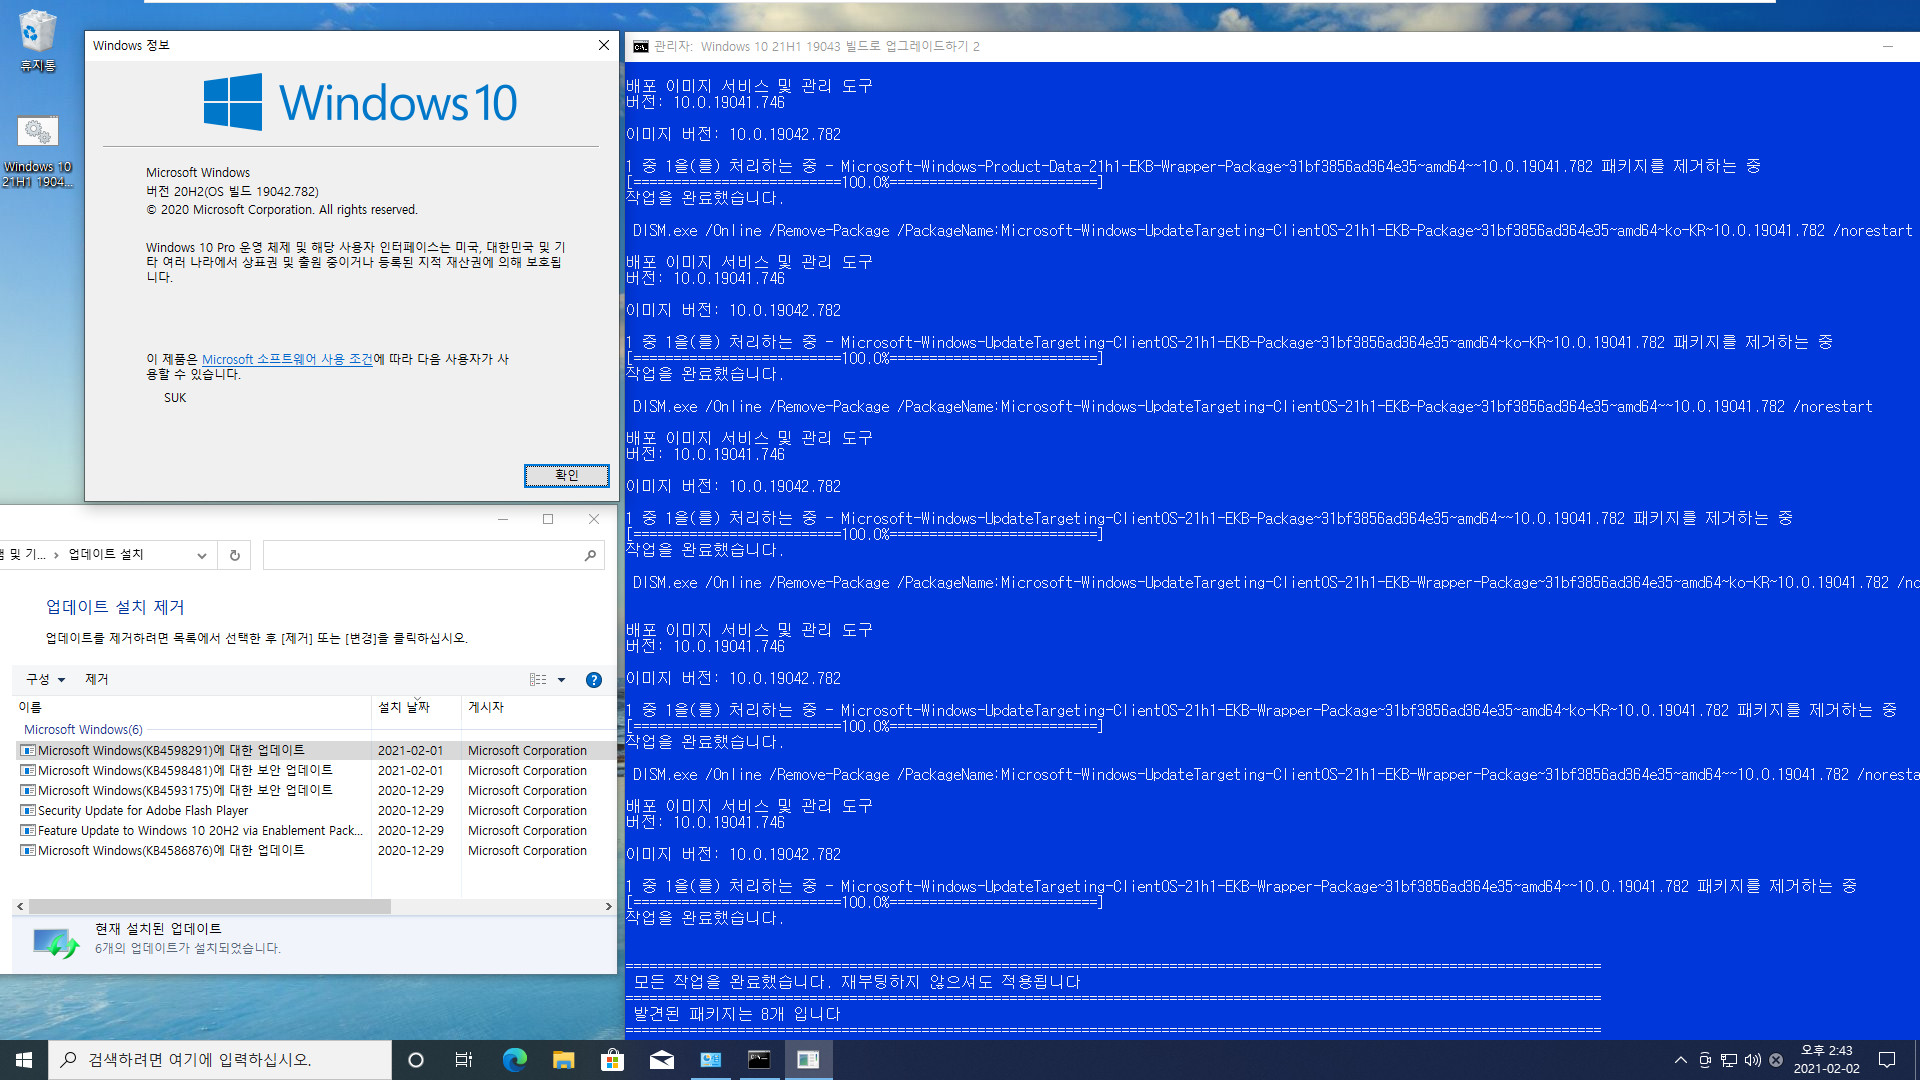 Windows 10 21H1 19043 빌드로 업그레이드하기2.bat 테스트 - 21H1 업그레이드 후에 새 누적 업데이트 설치하려면, 21H1 제거한 후에 새 누적 업데이트 설치해야 하네요 2021-02-02_144336.jpg